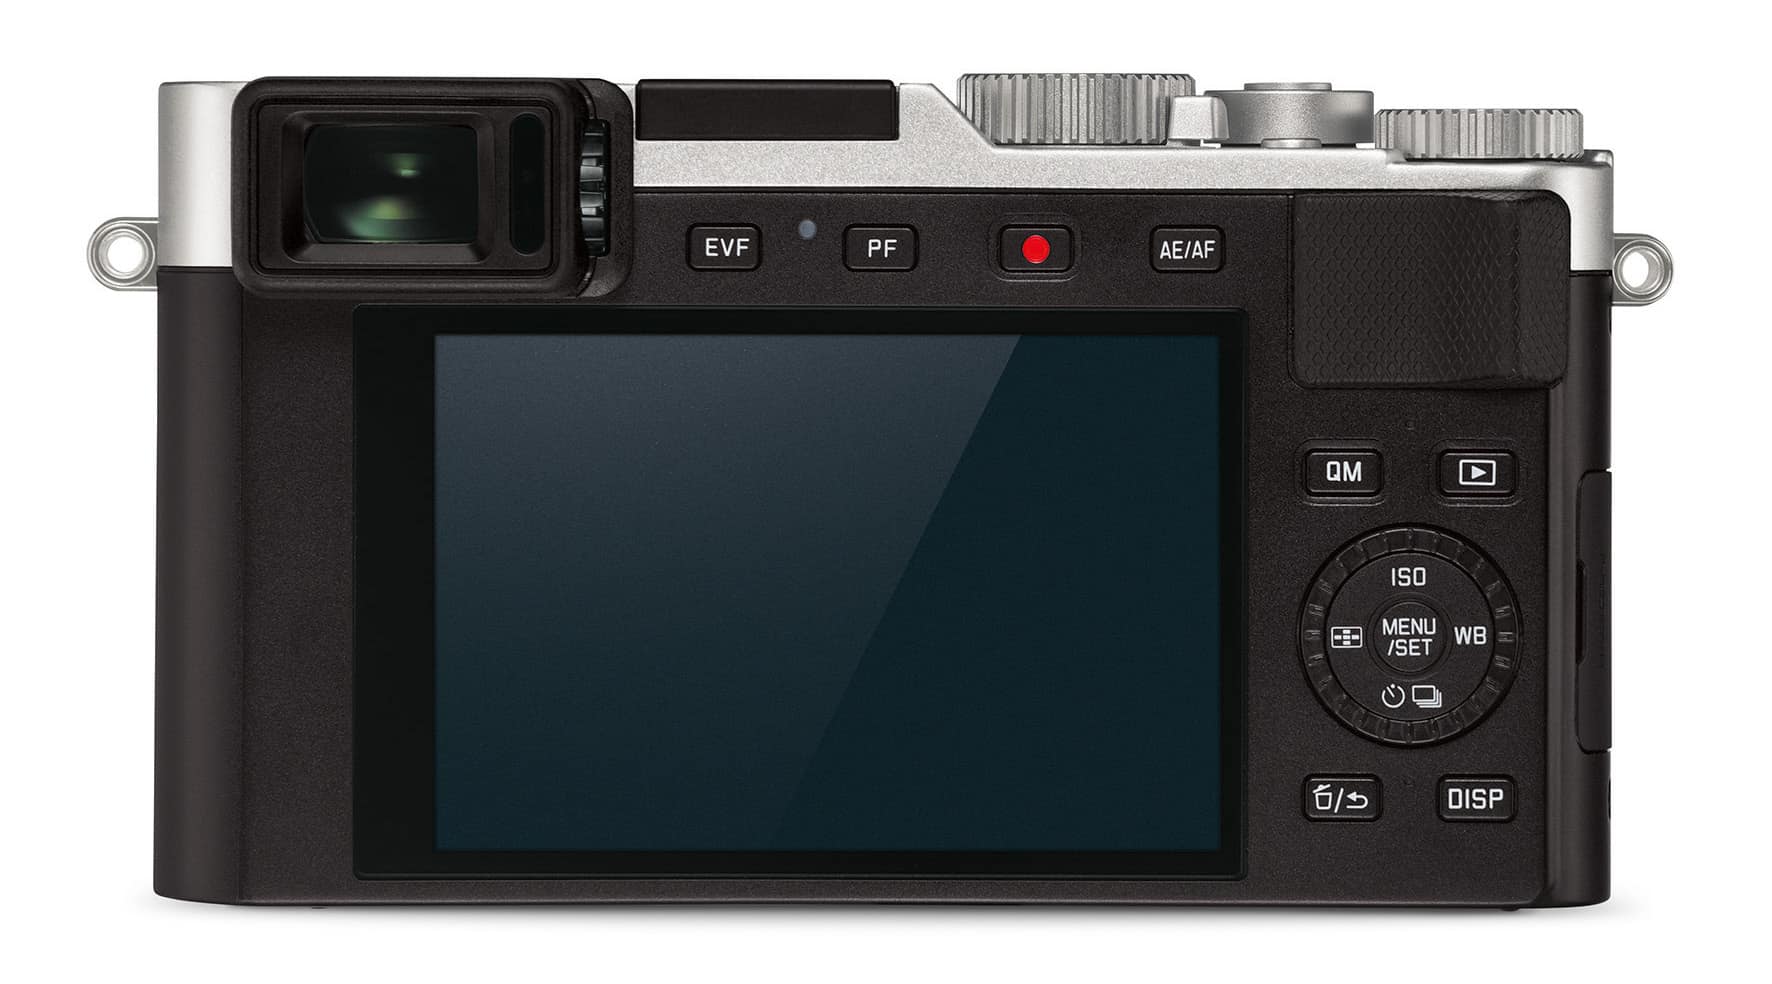 Leica D-Lux 7 Camera Announced, Price $1,195